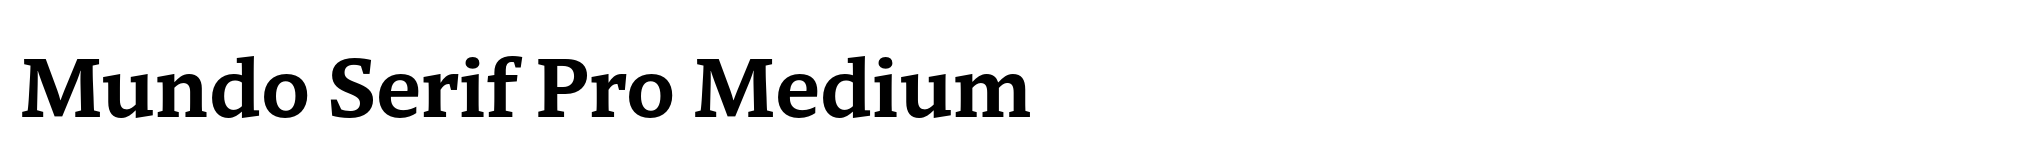 Mundo Serif Pro Medium image